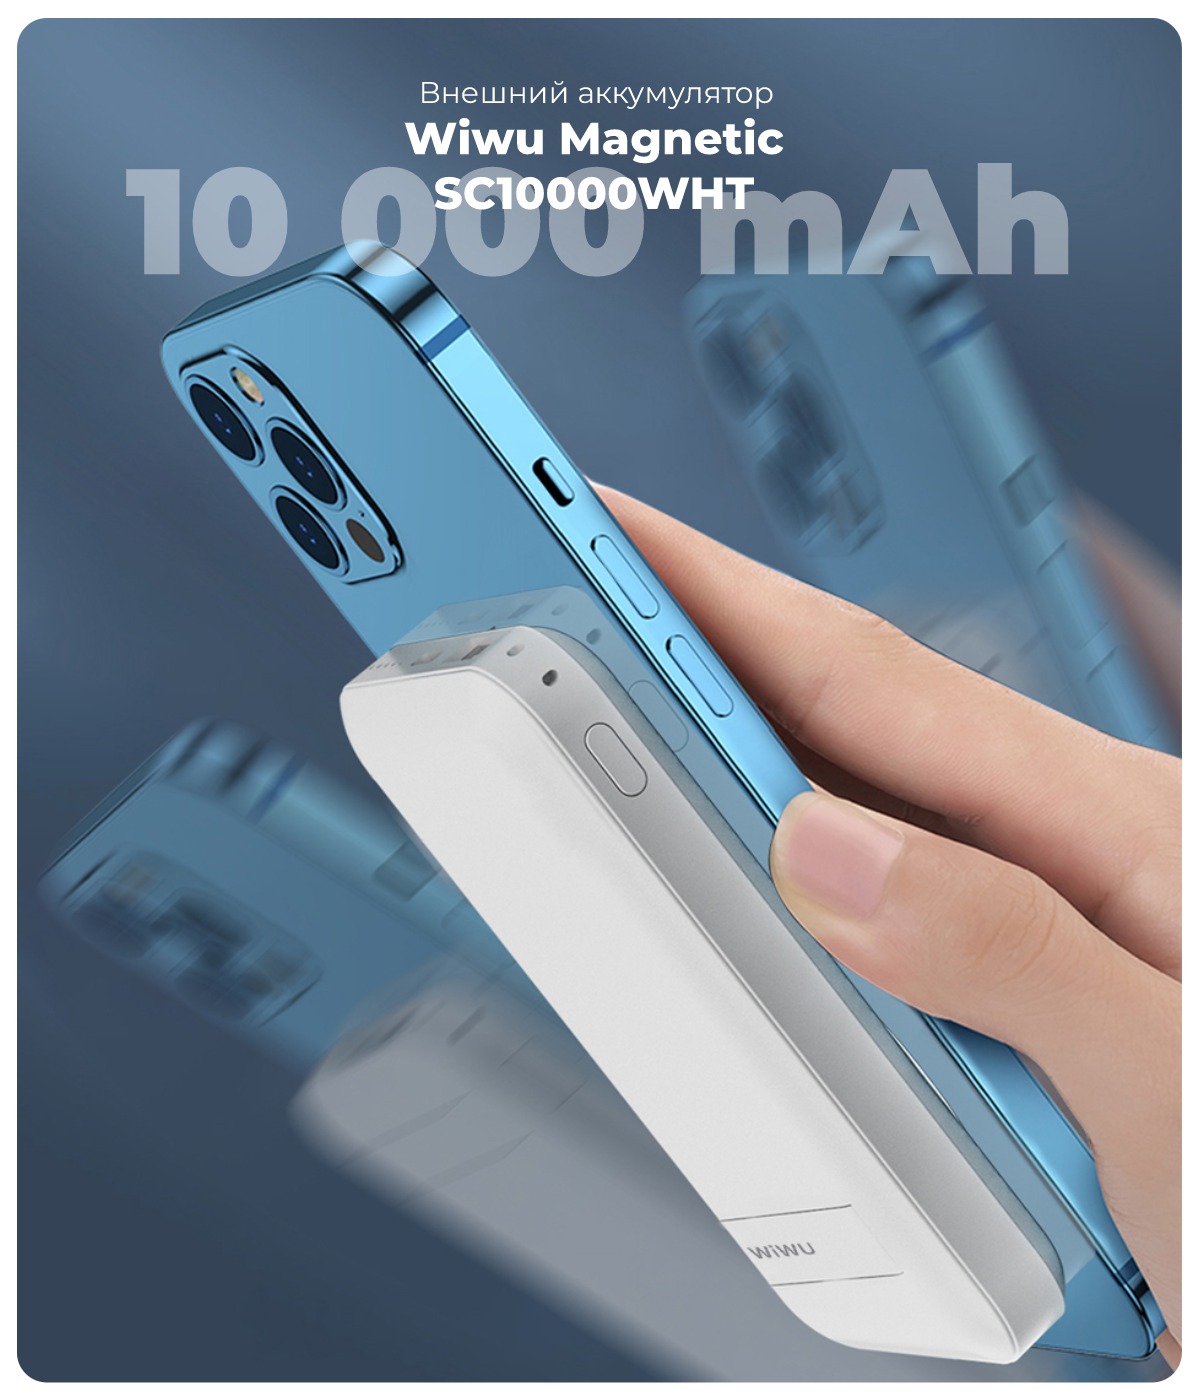 Wiwu-Magnetic-SC10000WHT-01